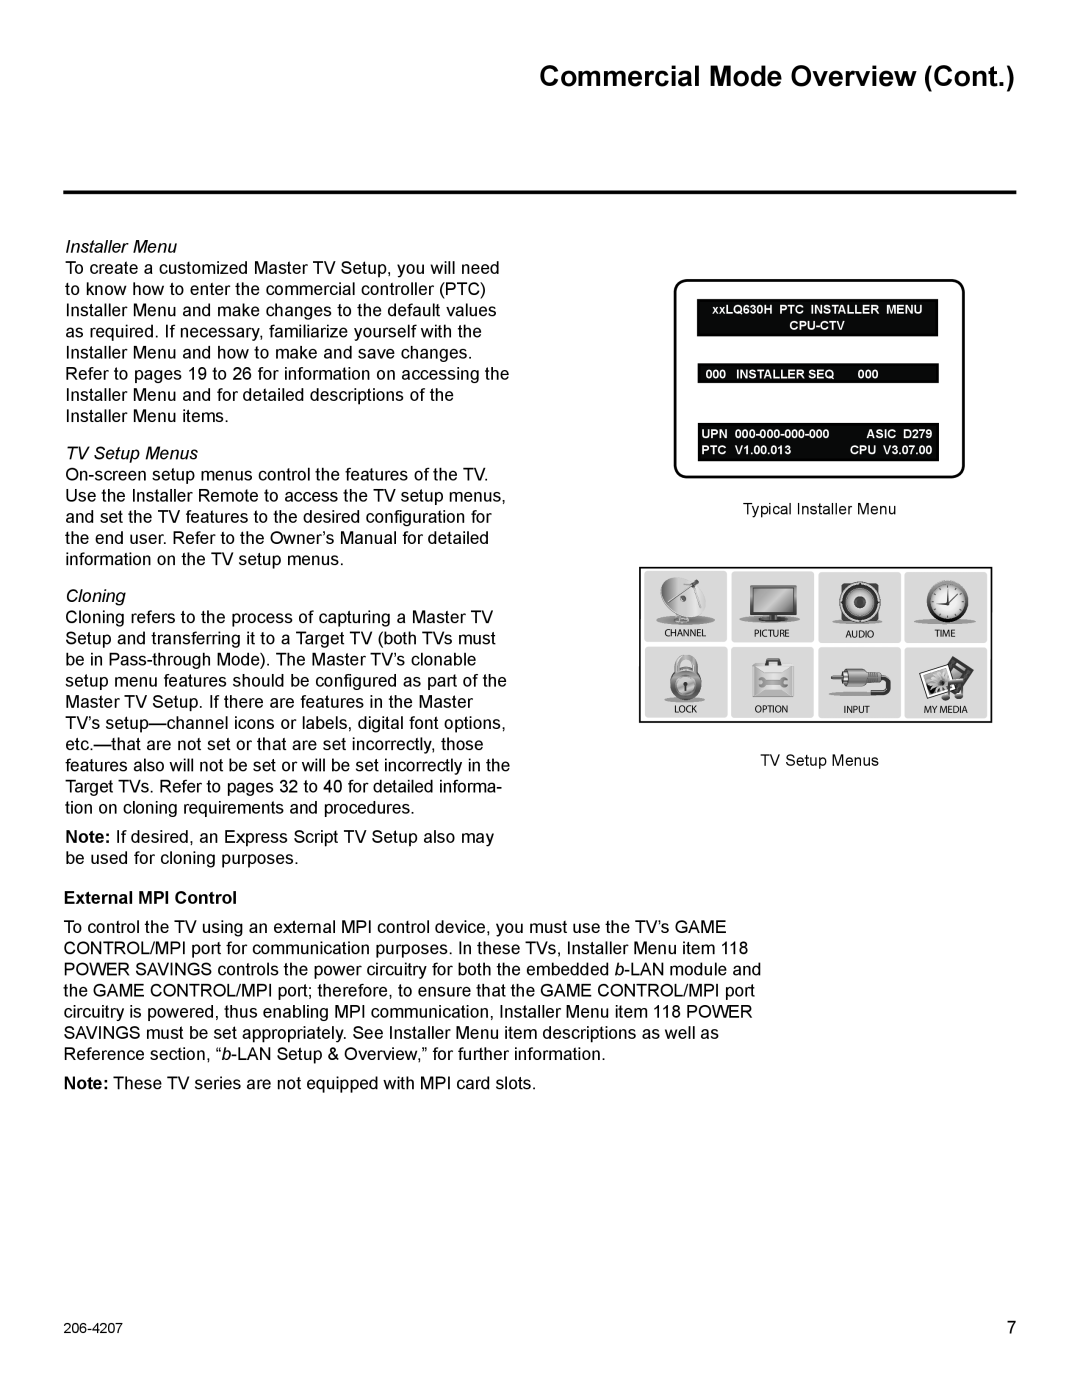 LG Electronics 32LQ630H Commercial Mode Overview Cont, Installer Menu, TV Setup Menus, Cloning, External MPI Control 